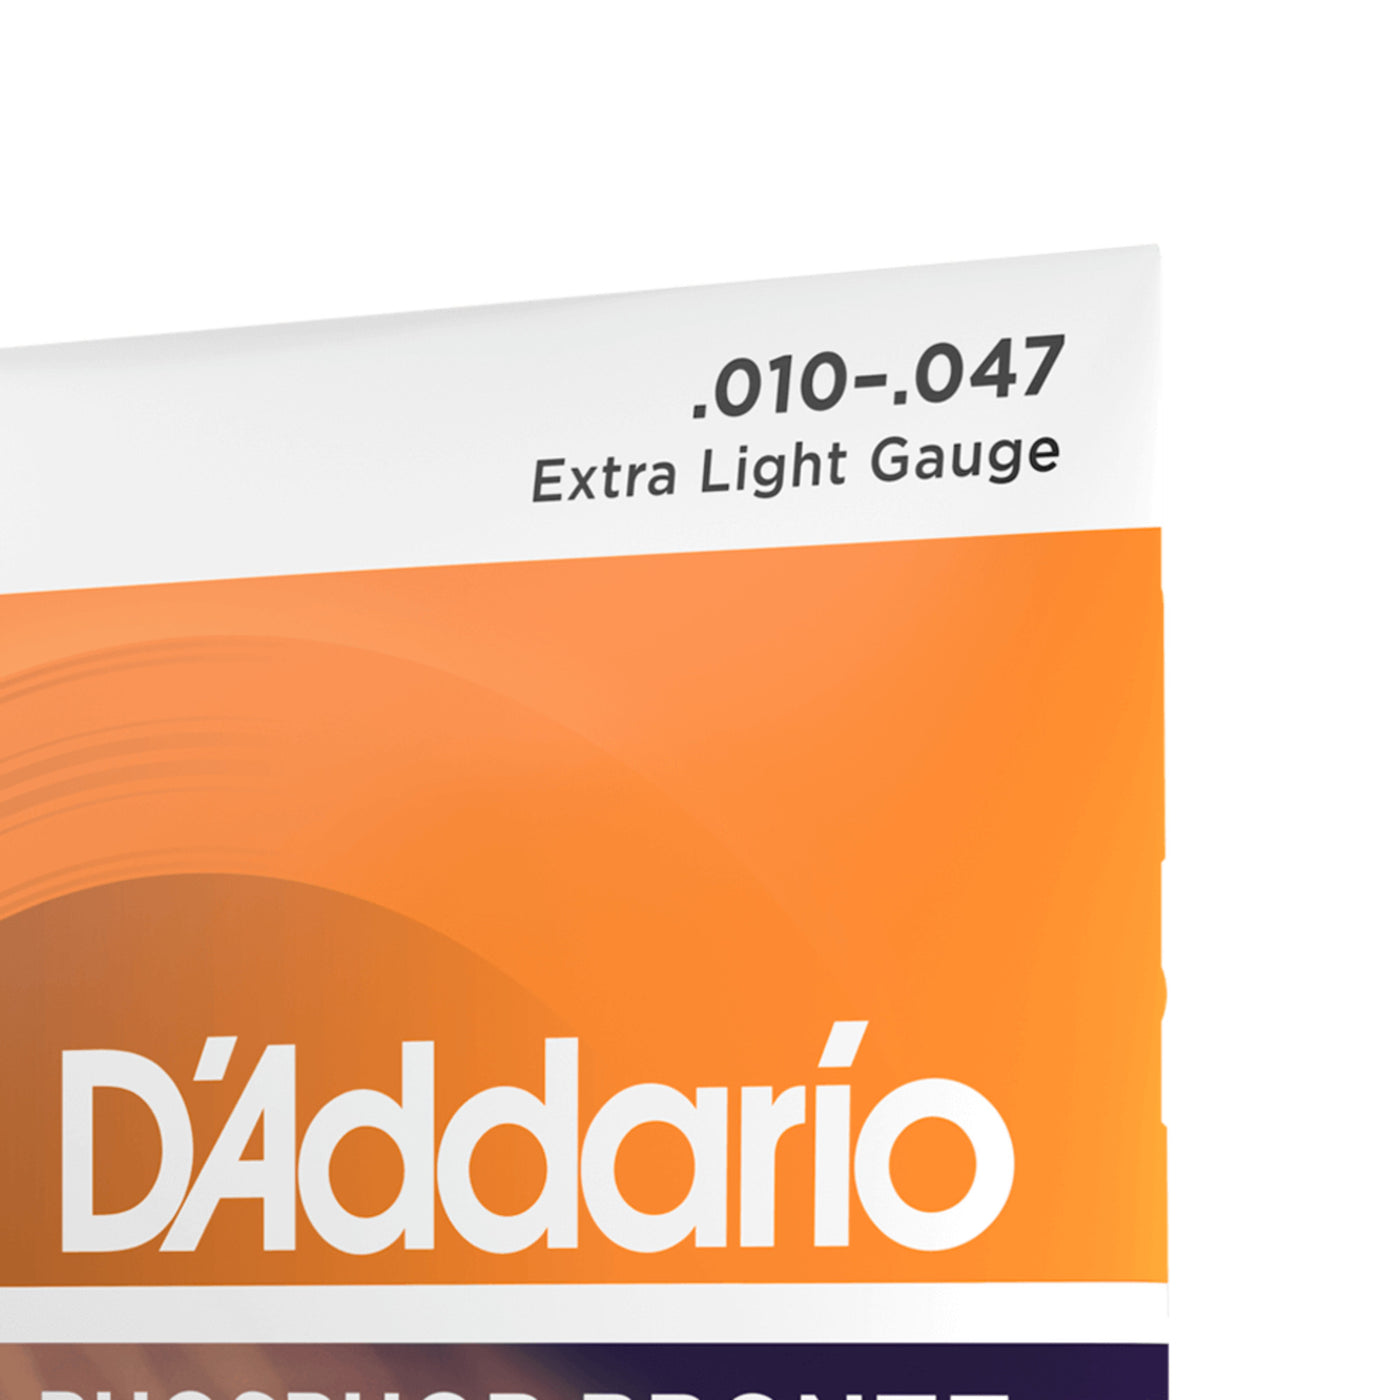 D'Addario Phosphor Bronze Acoustic Guitar Strings, Extra Light, 3 Sets (EJ15-3D)